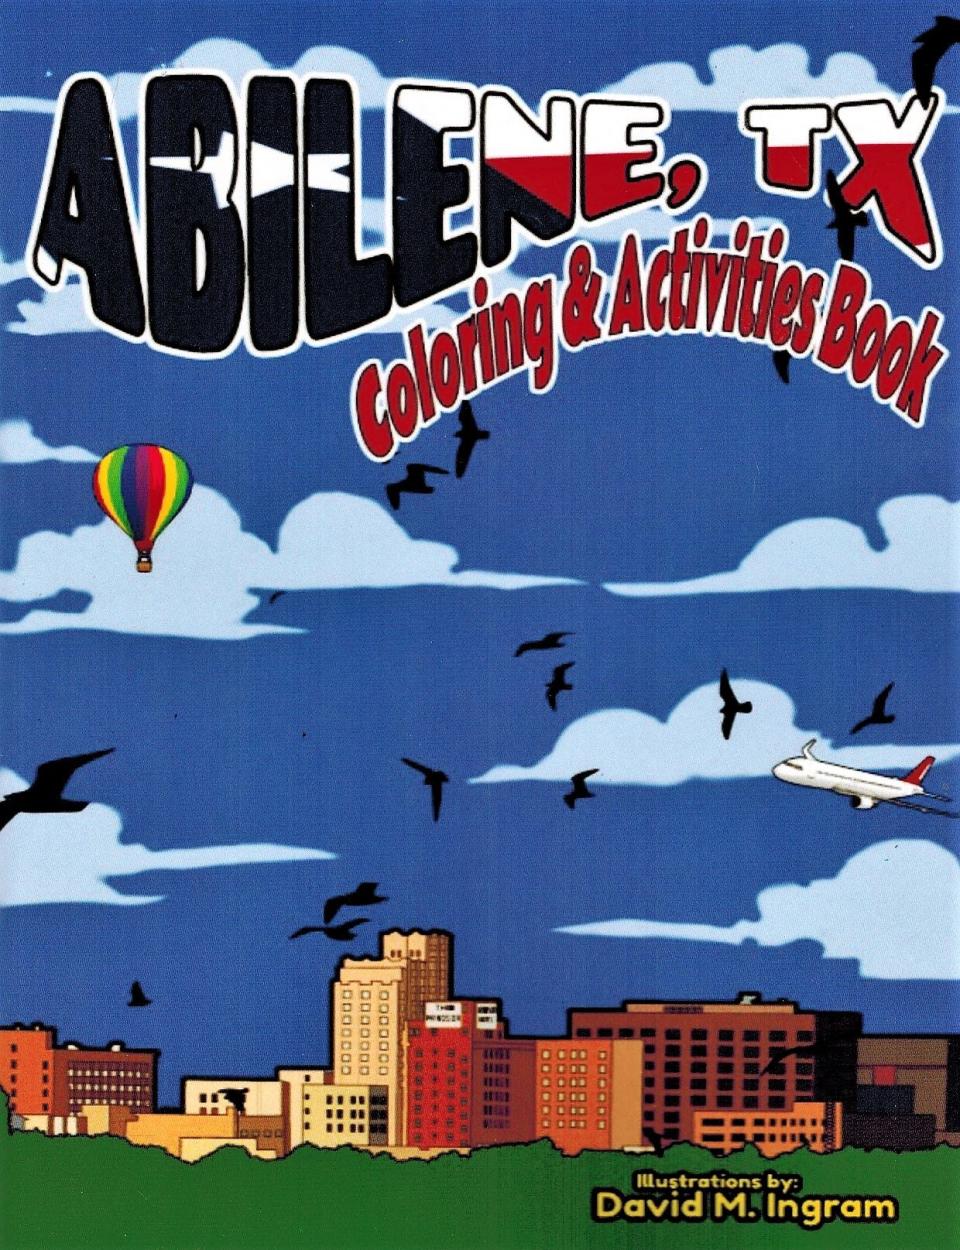 David Ingram created the "Abilene, TX Coloring & Activities Book" in 2022.